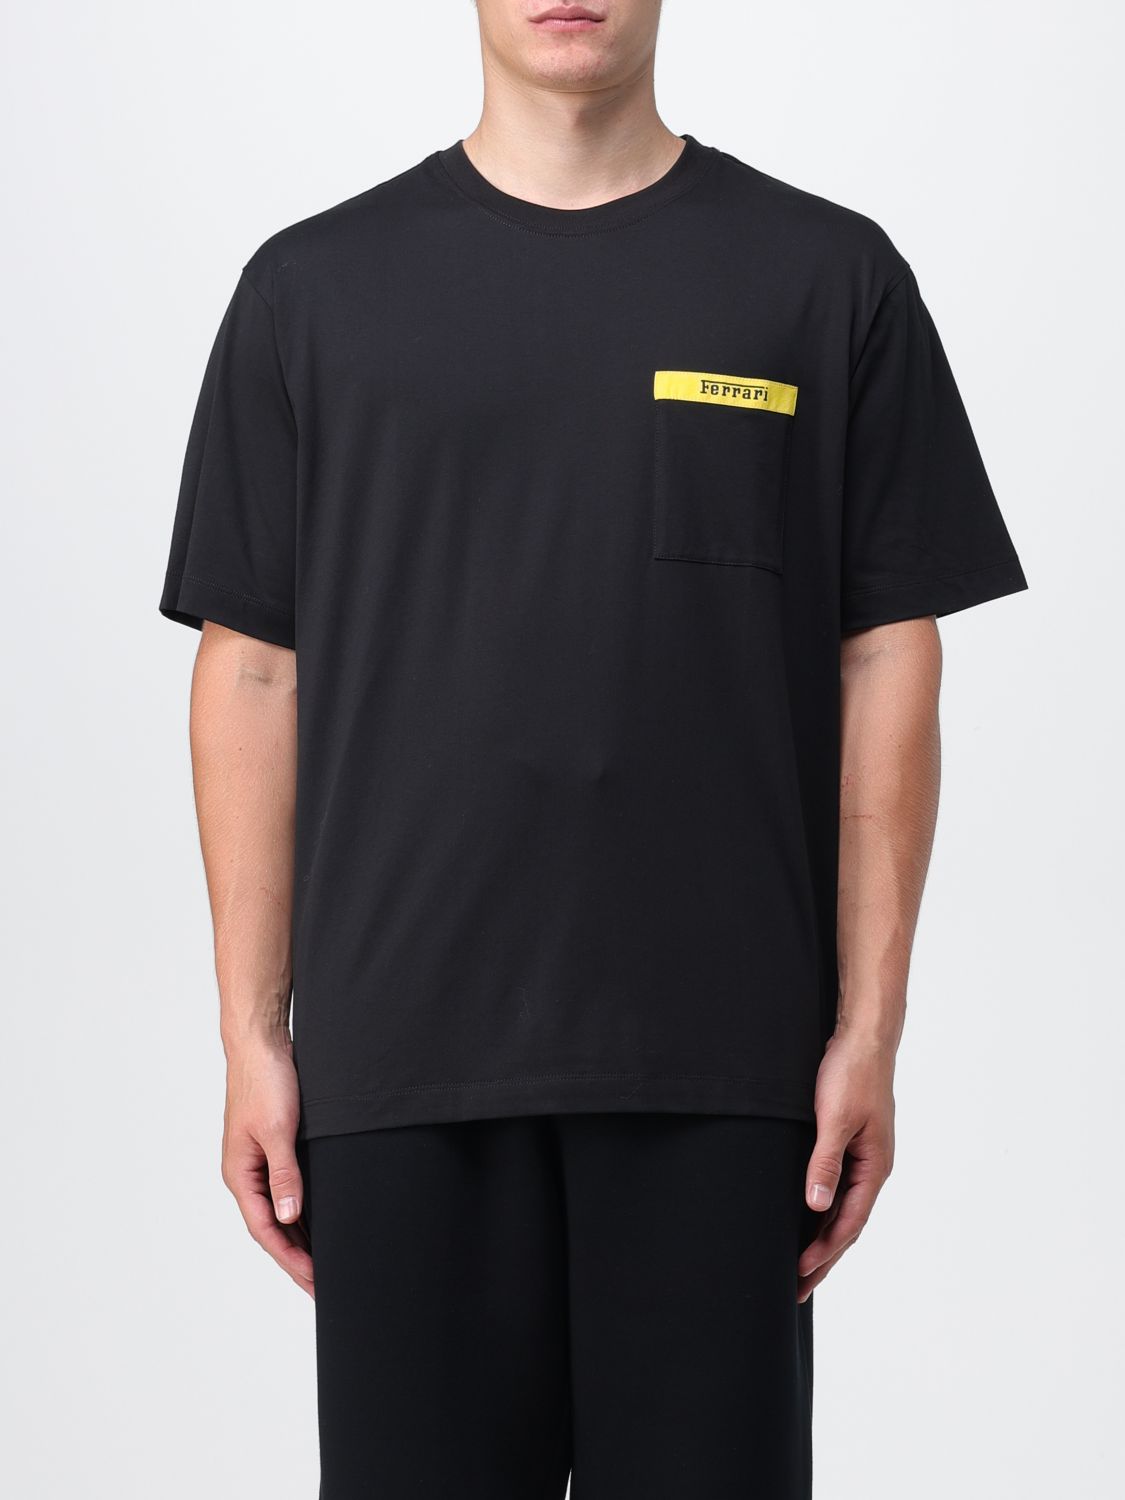 Ferrari T-Shirt FERRARI Men colour Black